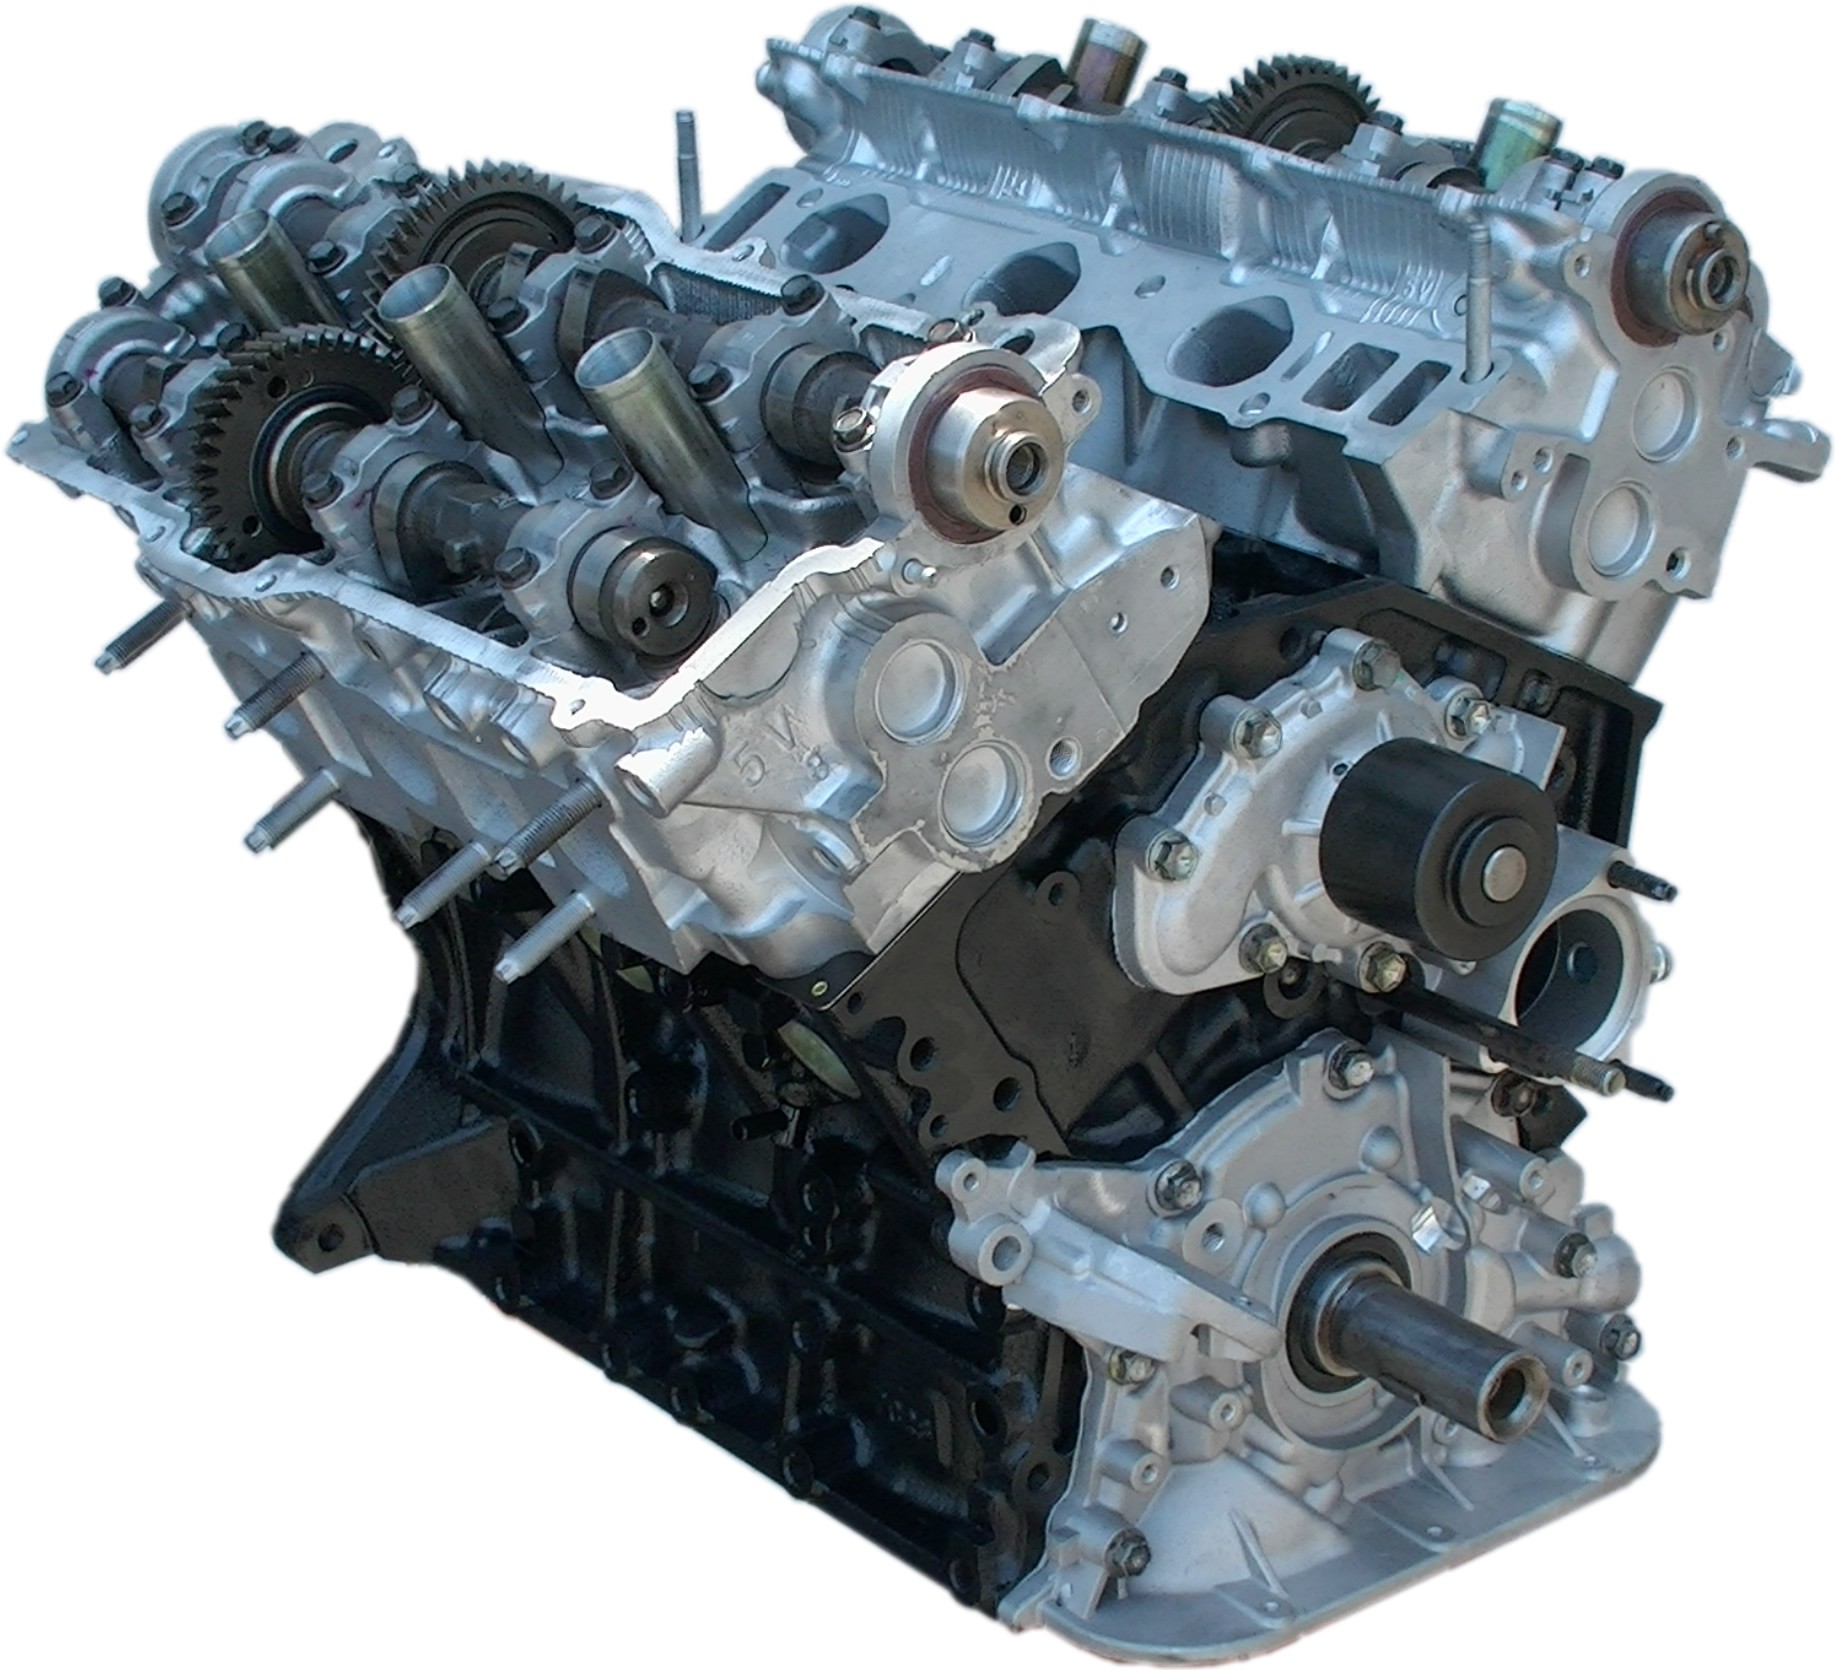 2014 Toyota Tacoma Engine 4.0 L V6